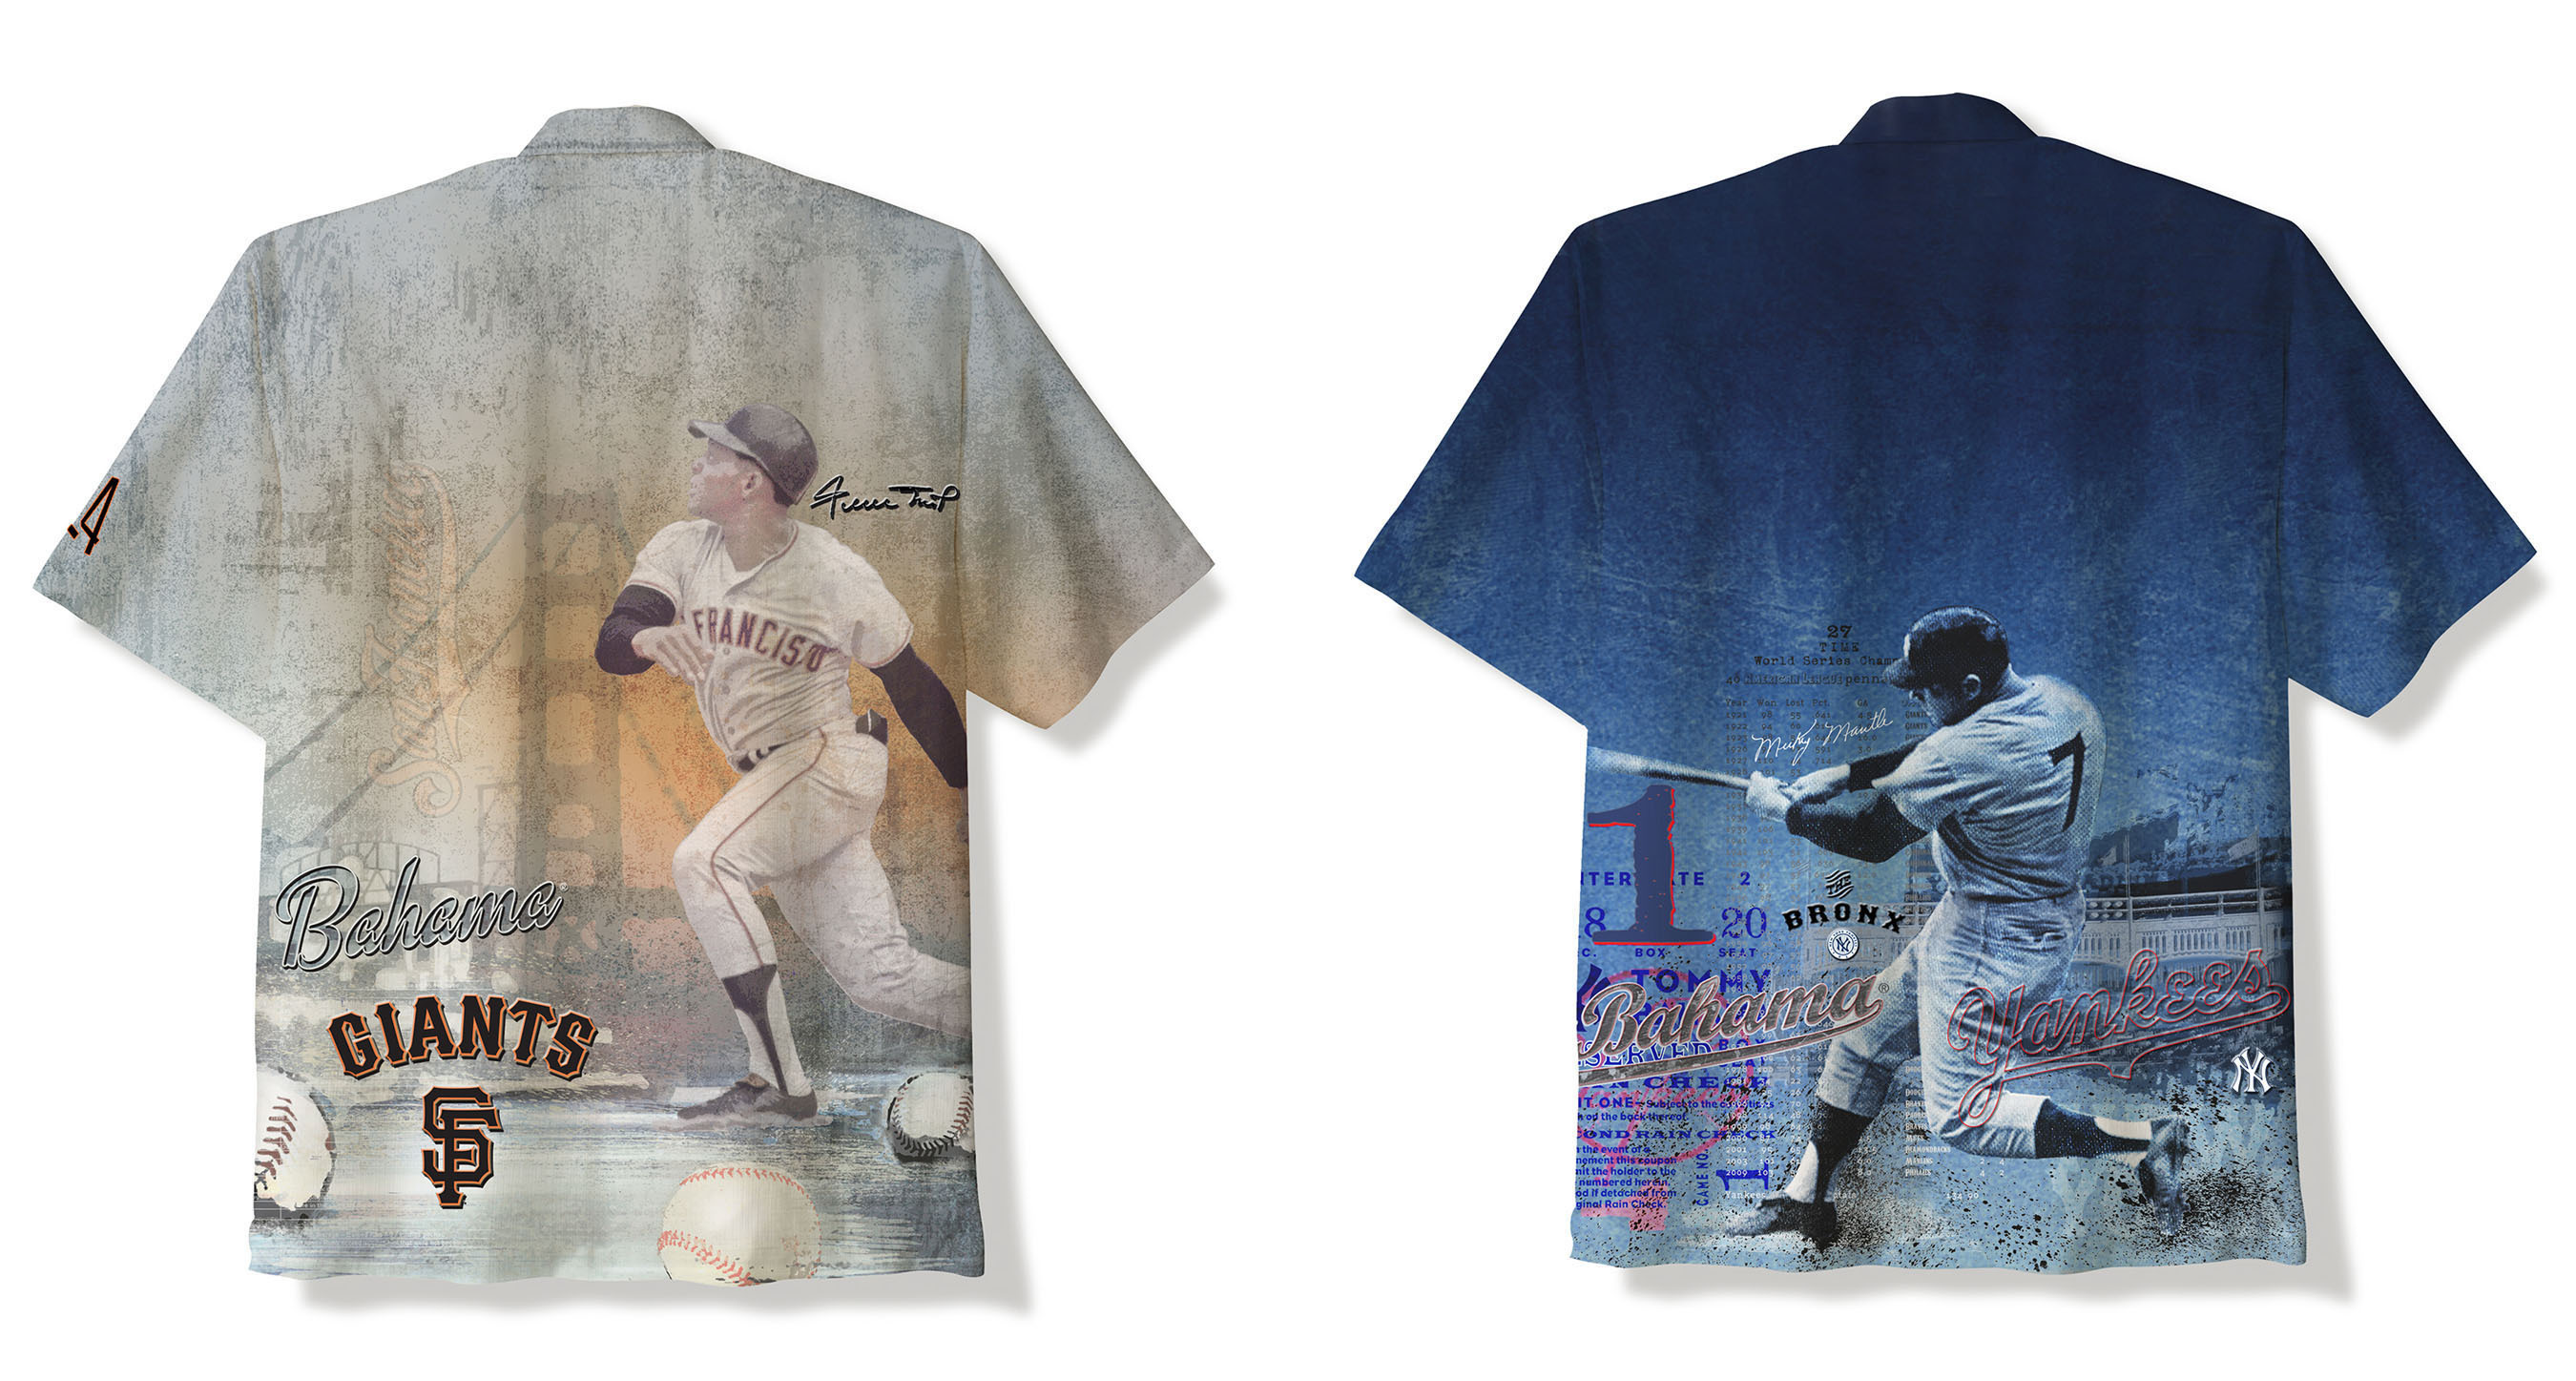 Tommy Bahama Announces 2015 Major League Baseball Collection